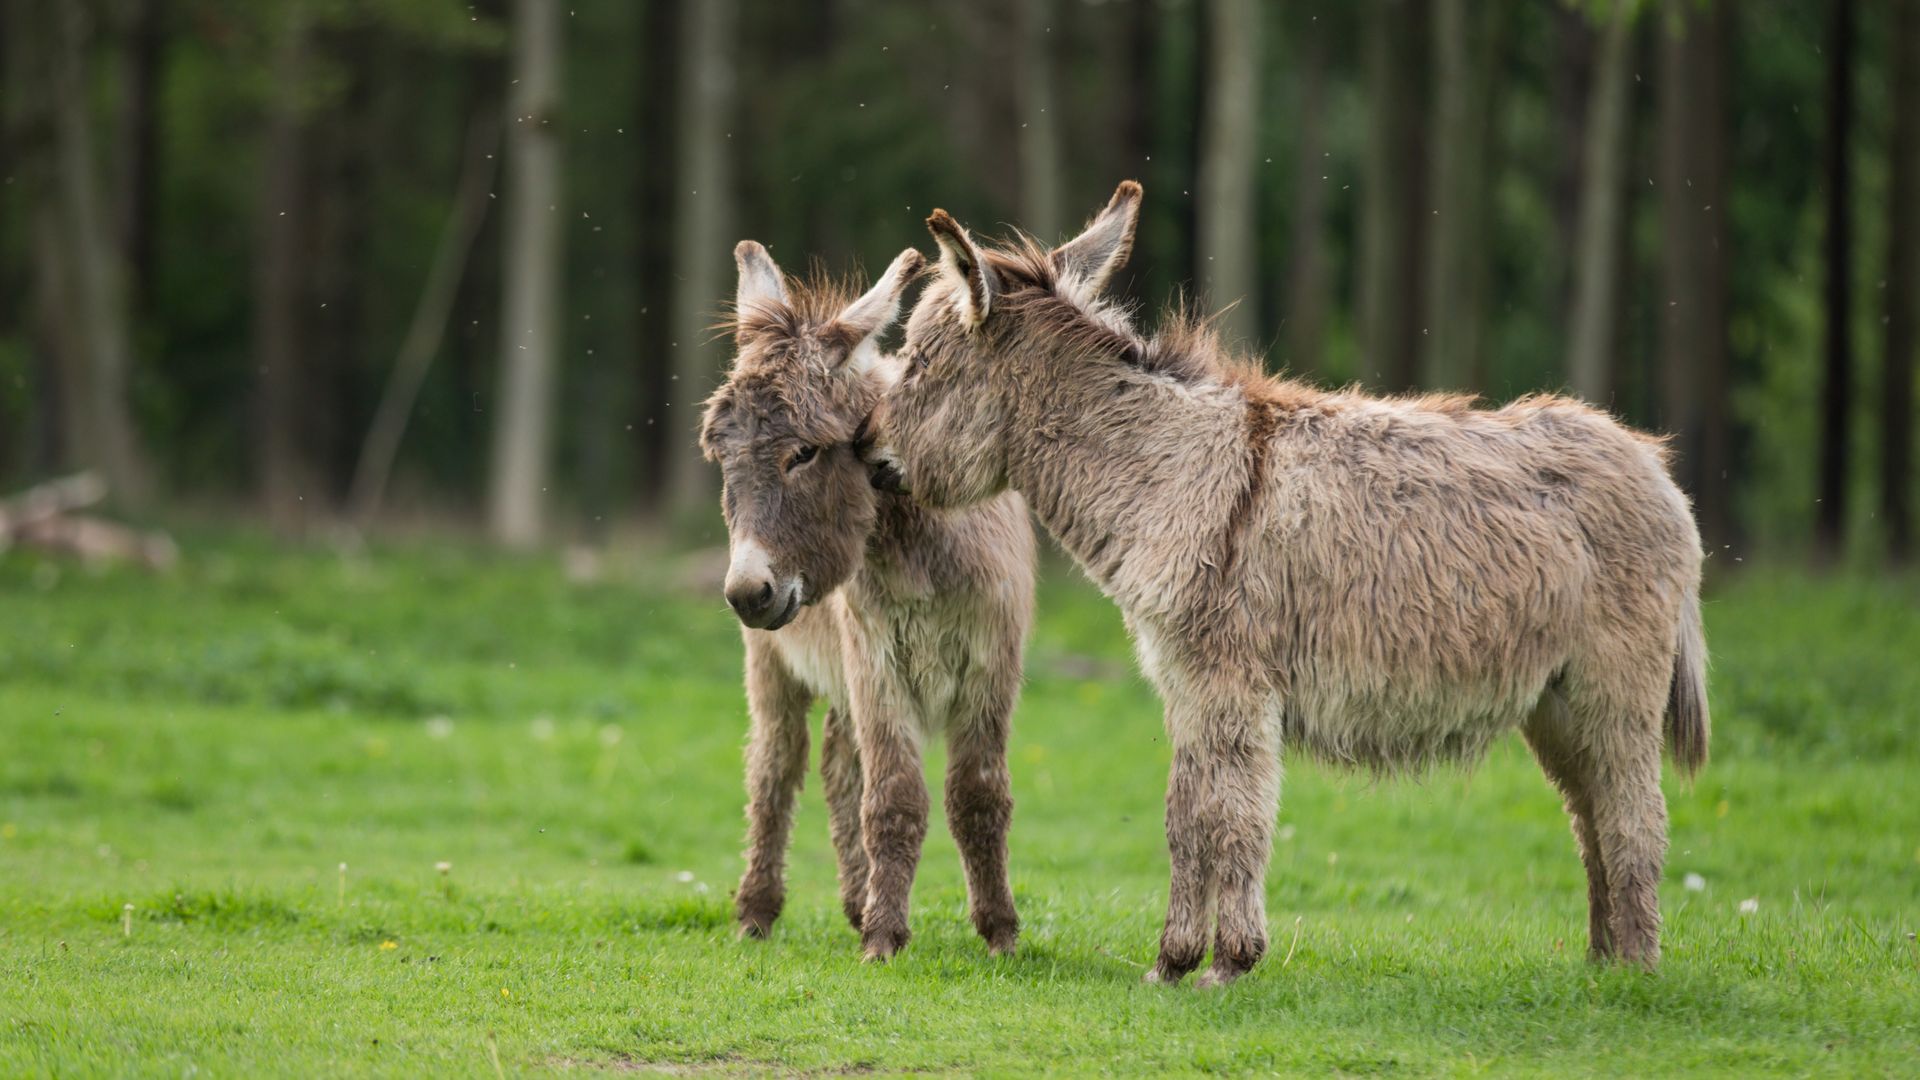 Photo of two donkeys